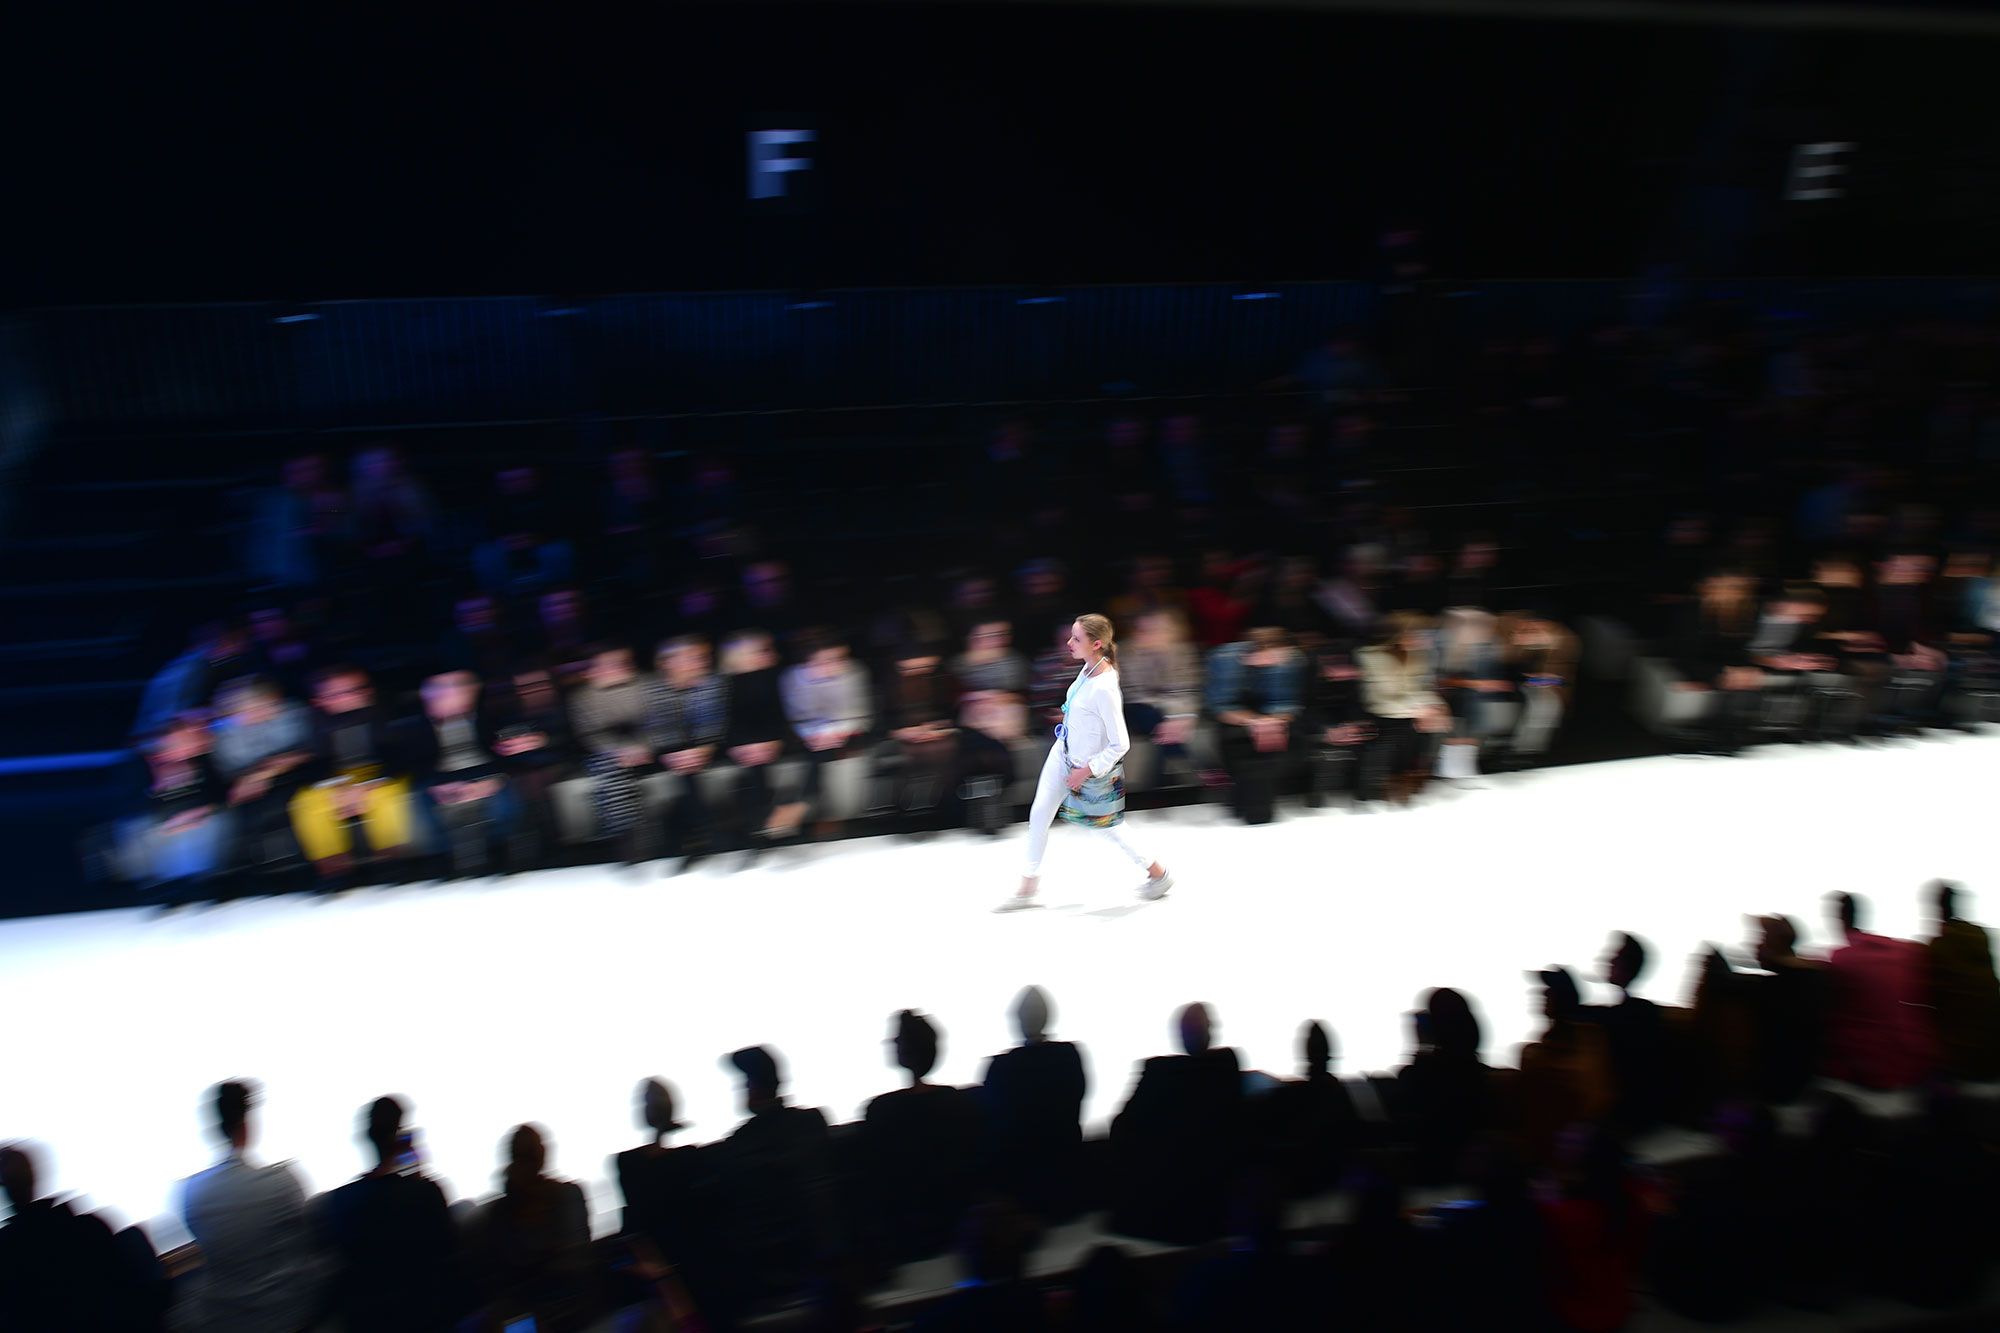 Livestream: Watch Louis Vuitton's Cruise 2020 fashion show, live